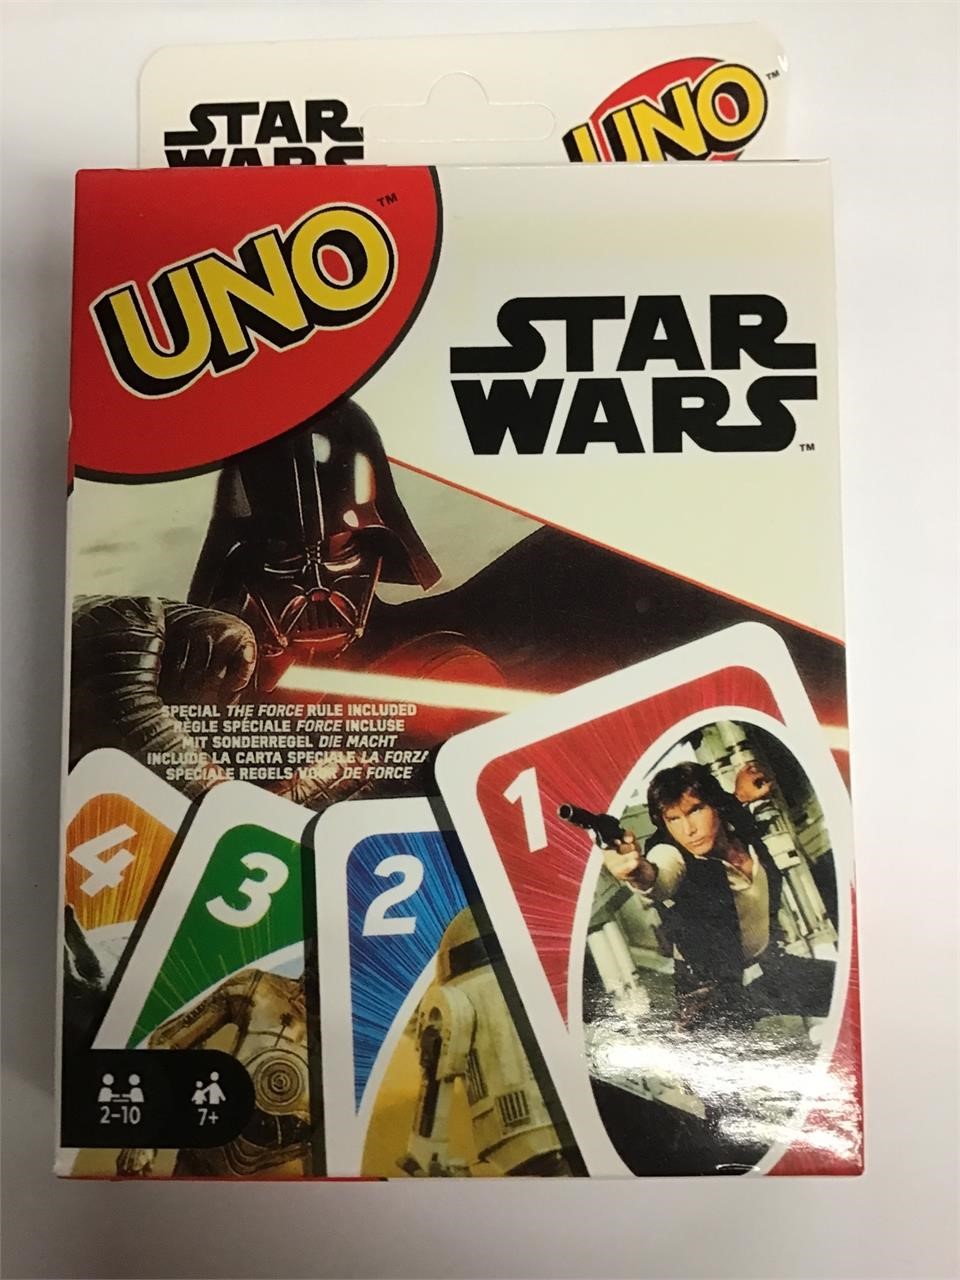 STAR WARS UNO CARDS